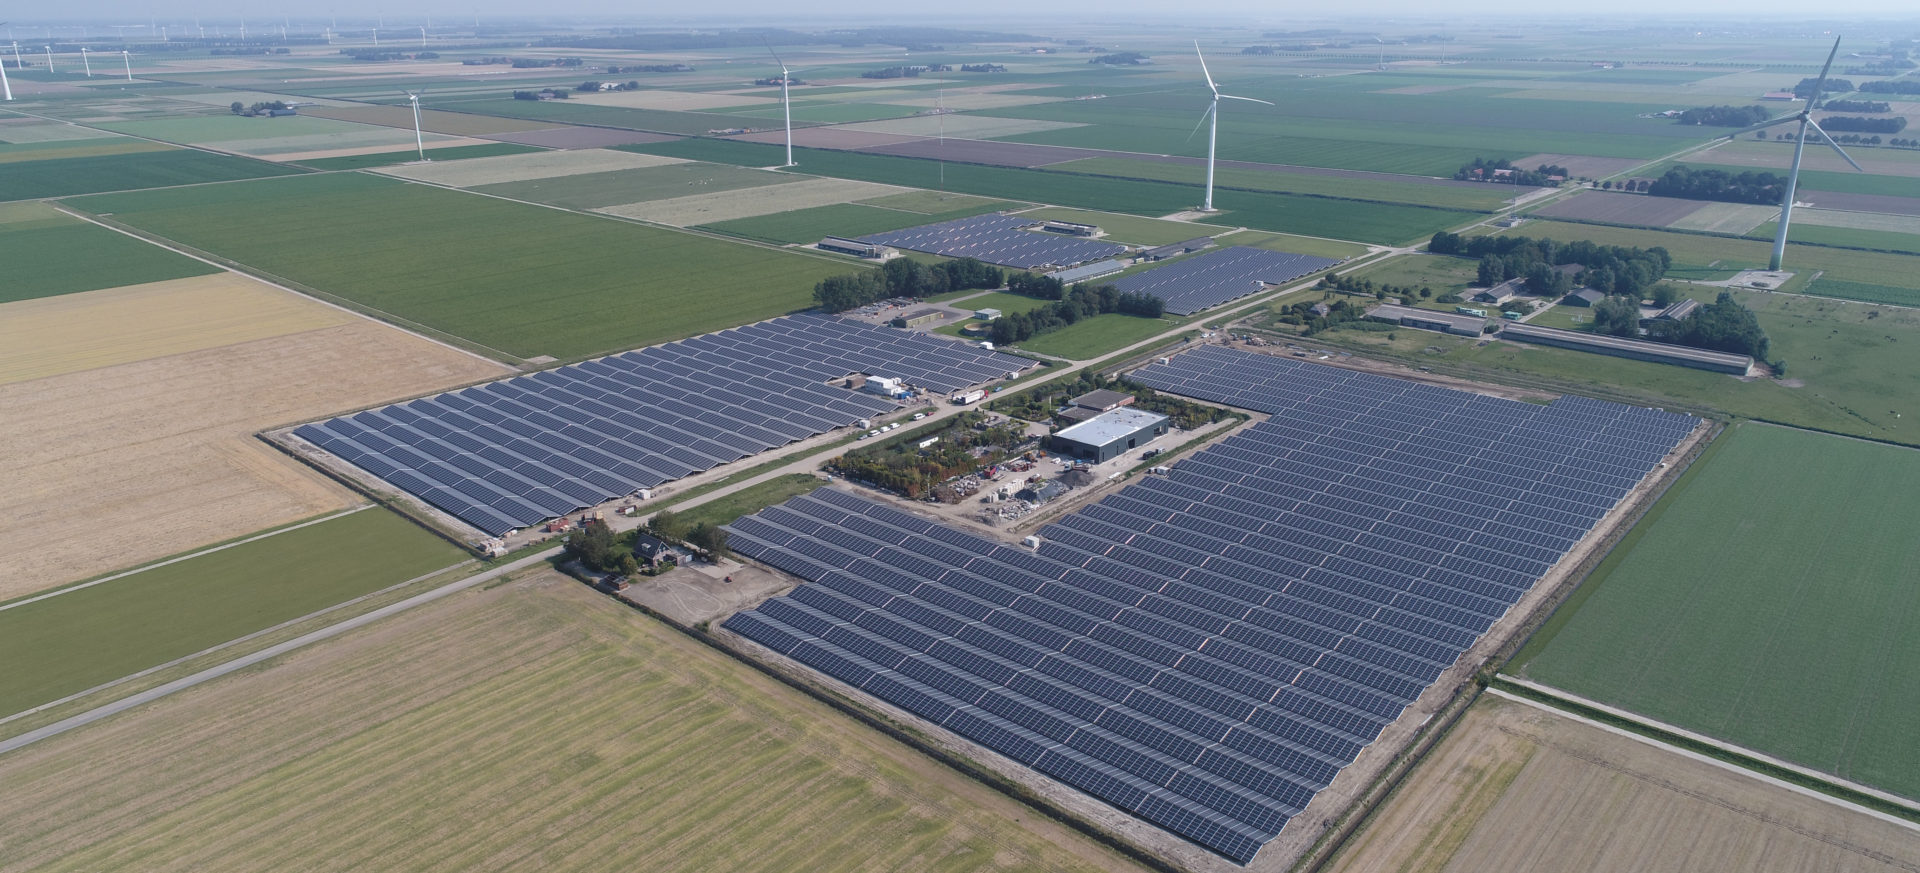 Luftaufnahme des Solarparks in Lelystad, Niederlanden